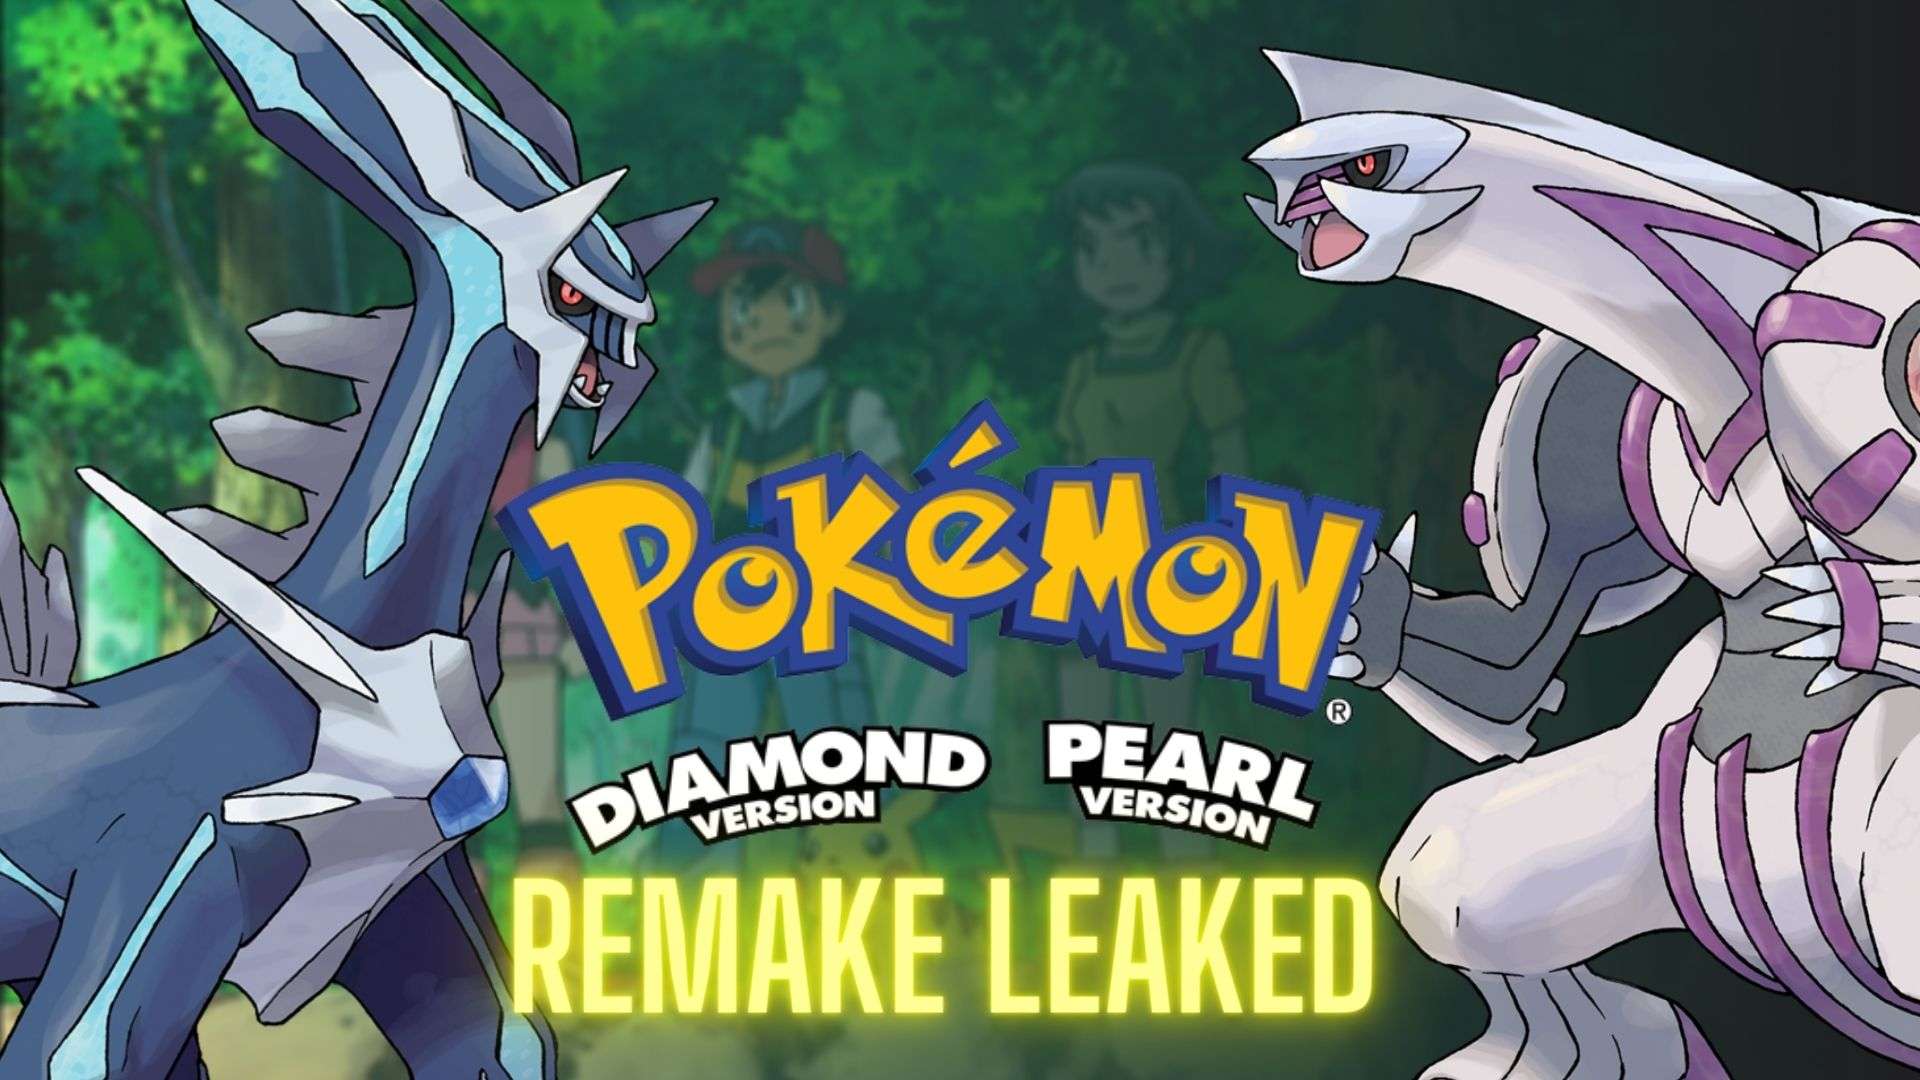 Pokemon Diamond Pearl remake